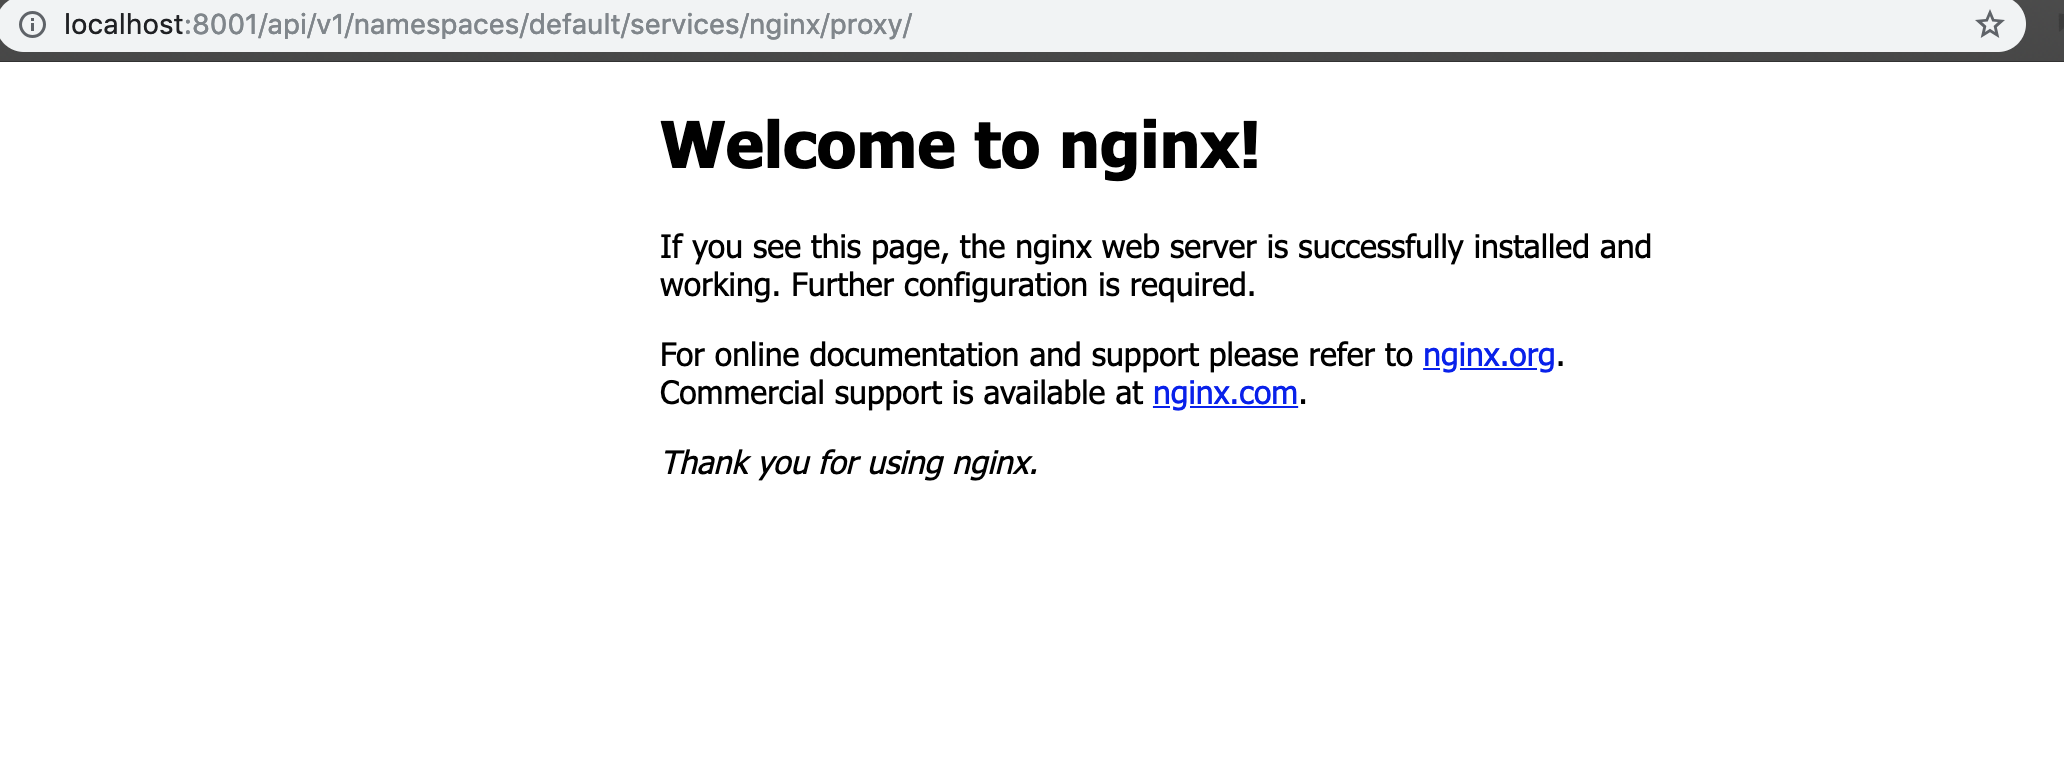 nginx via kube-proxy